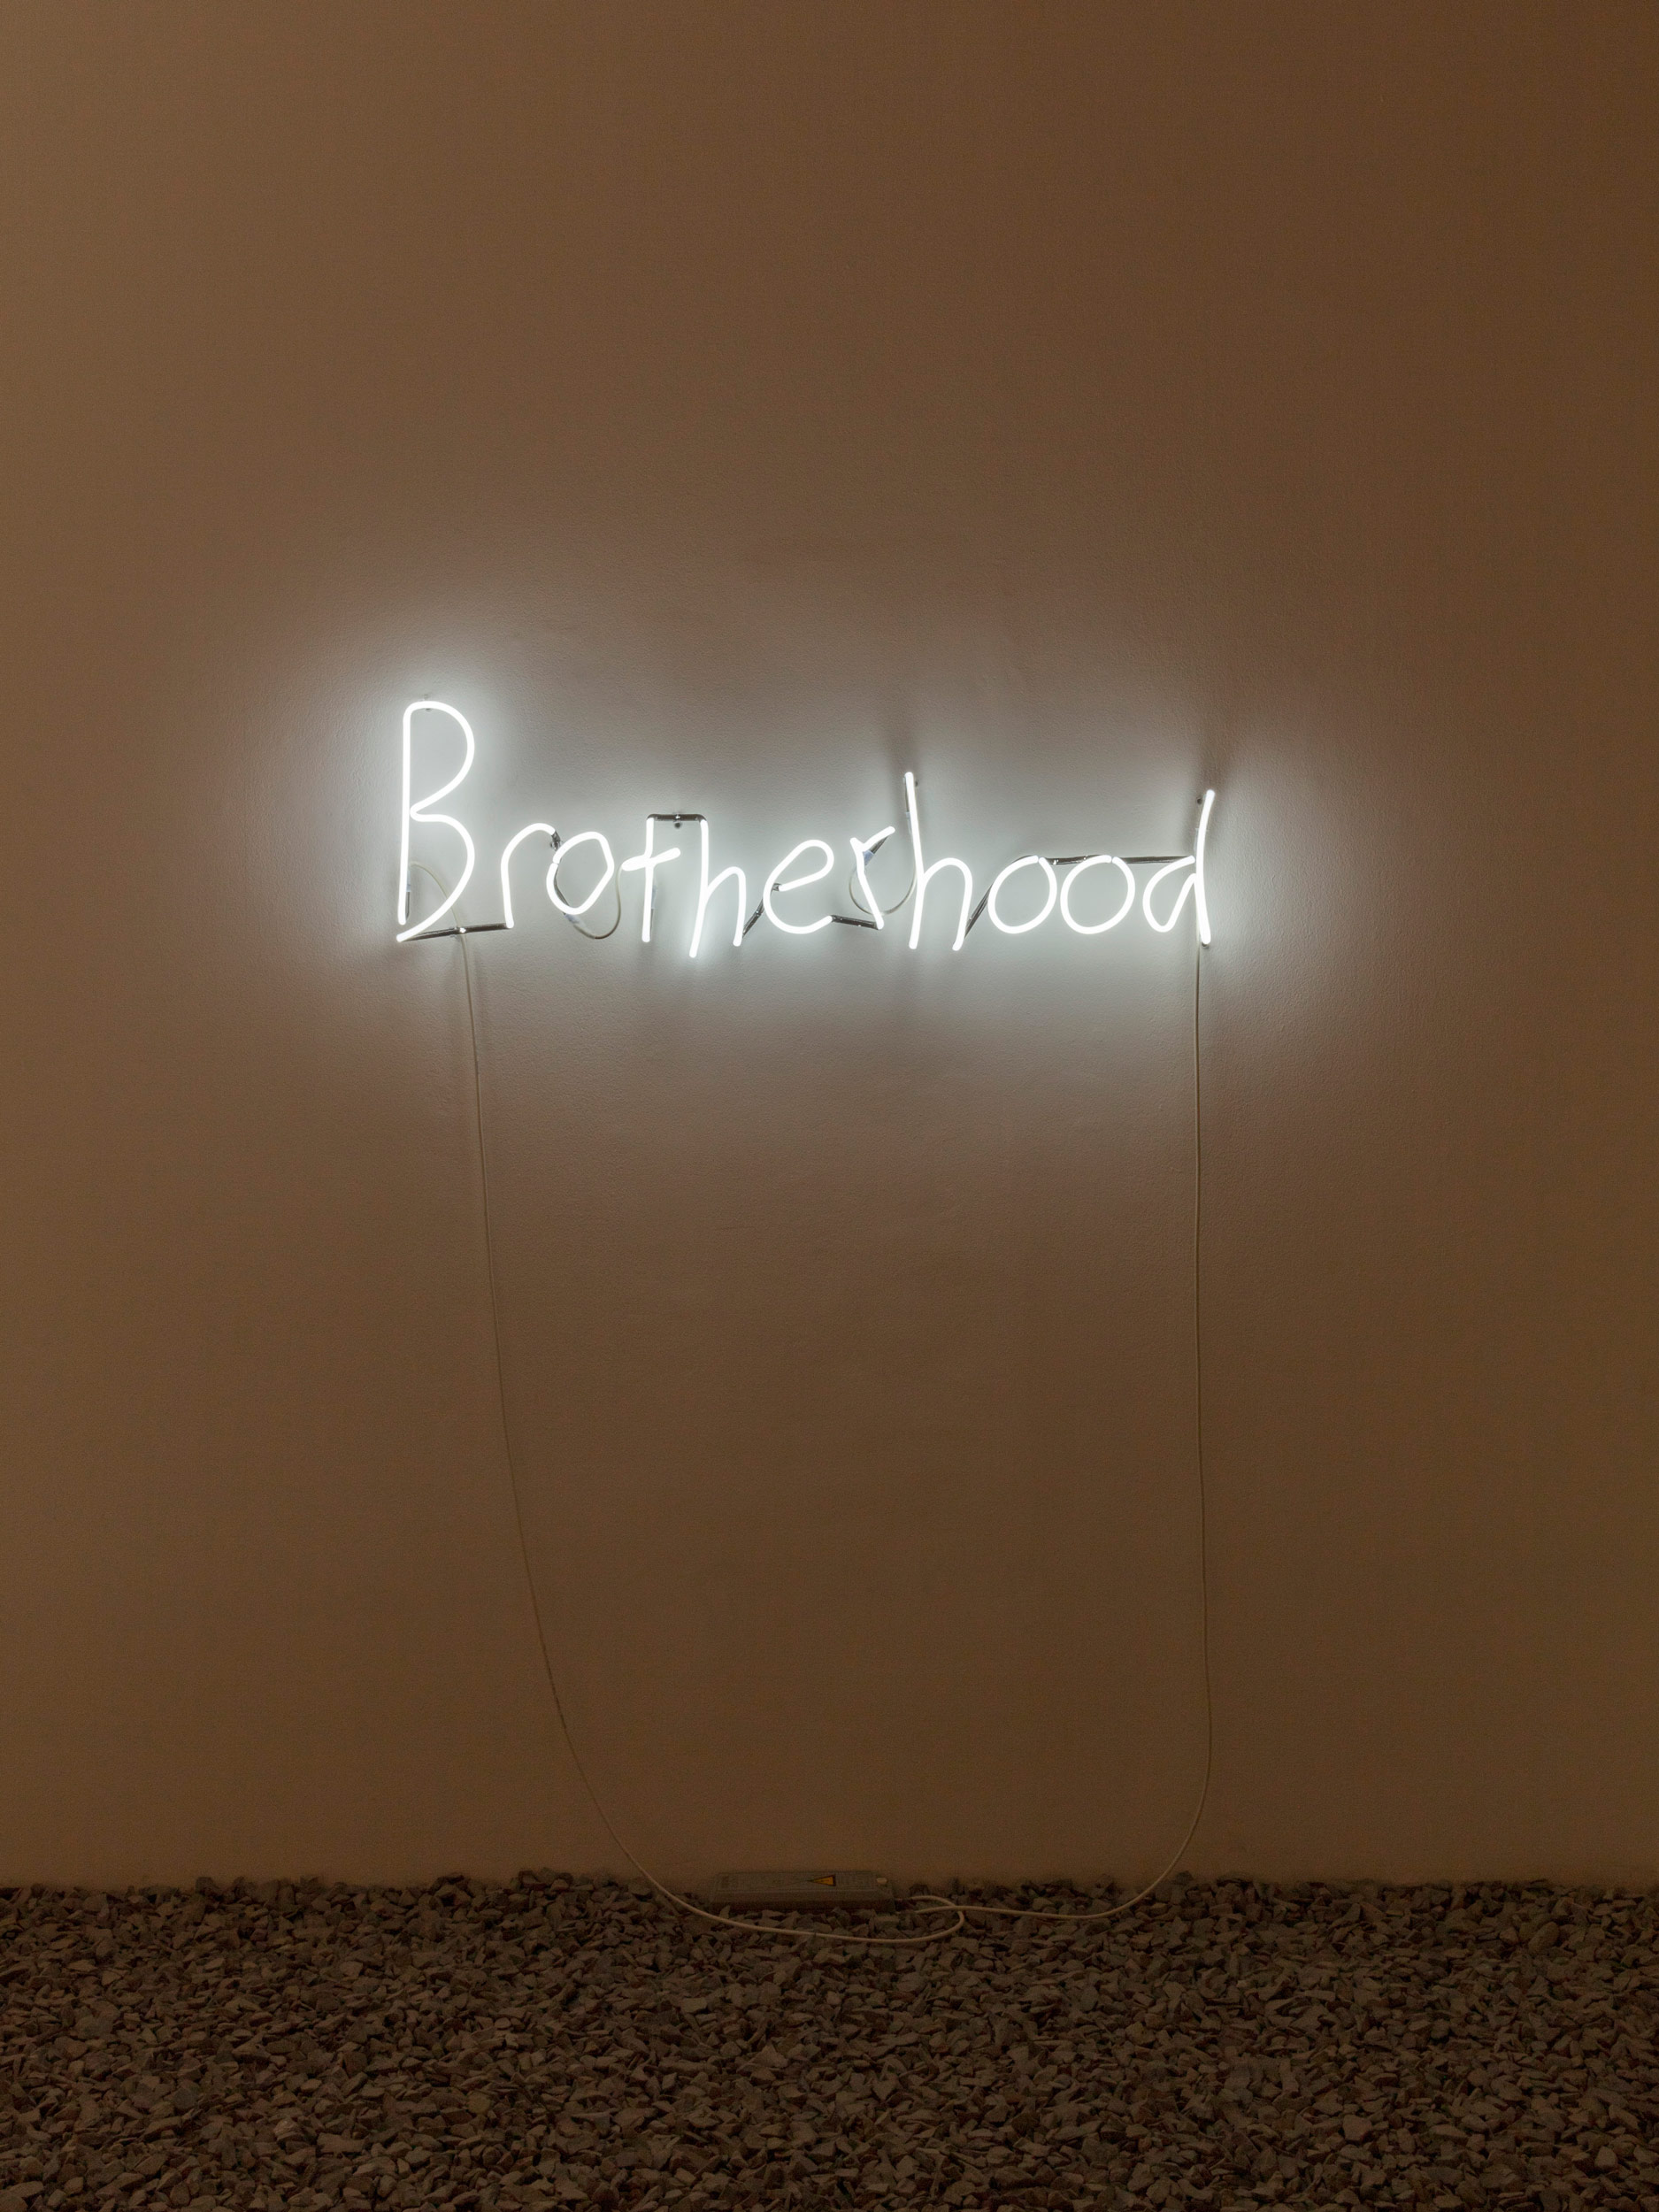  - Brotherhood, 2020